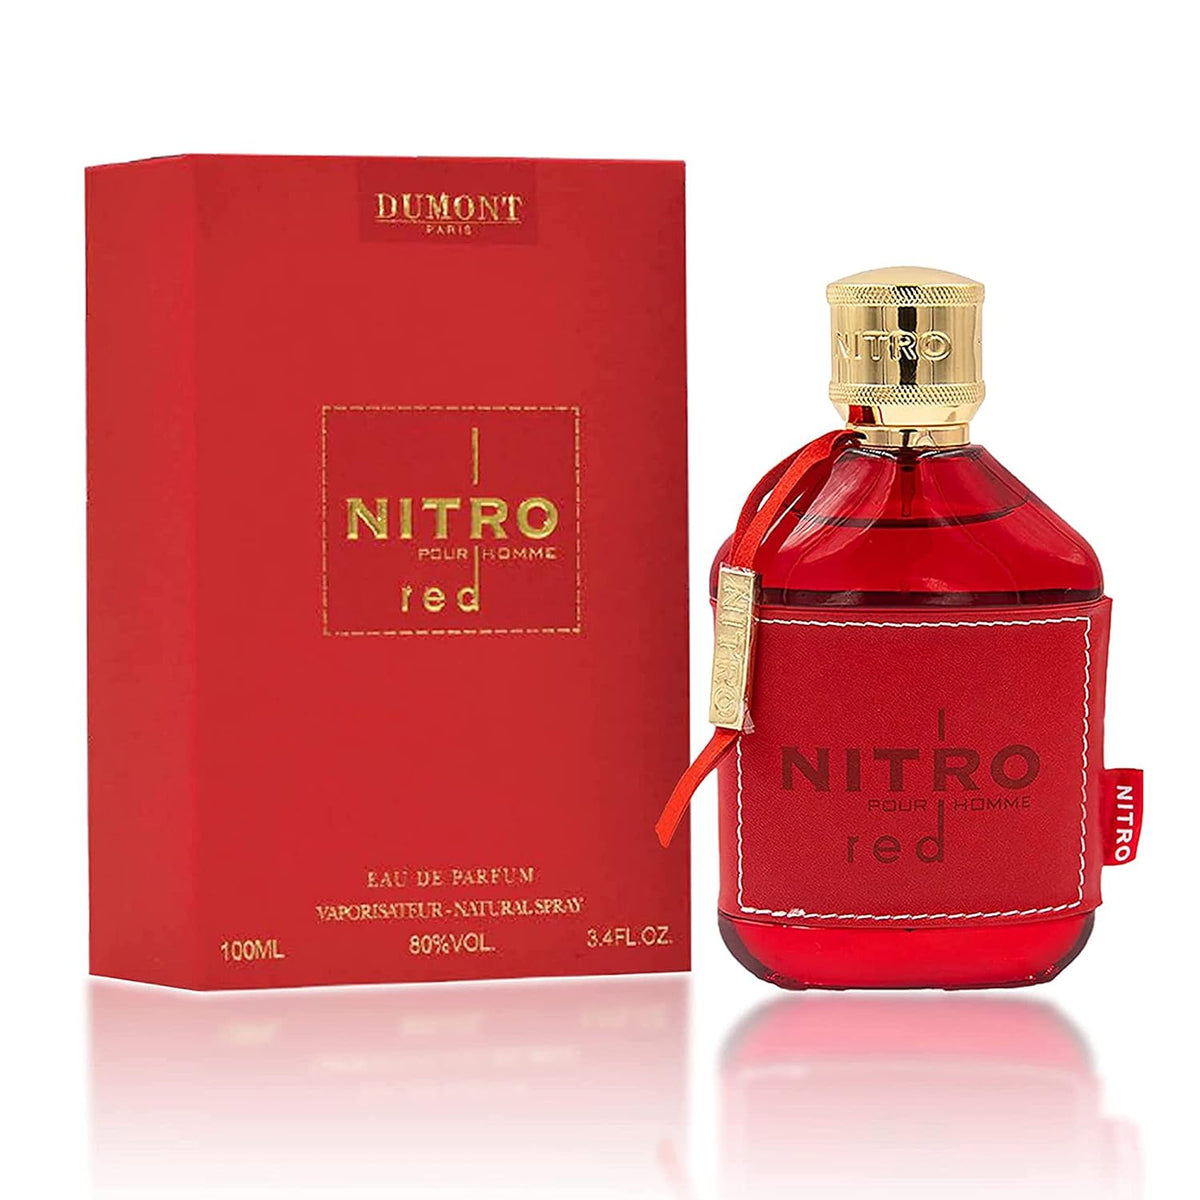 Nitro Red 3.4 OZ By Dumont Paris